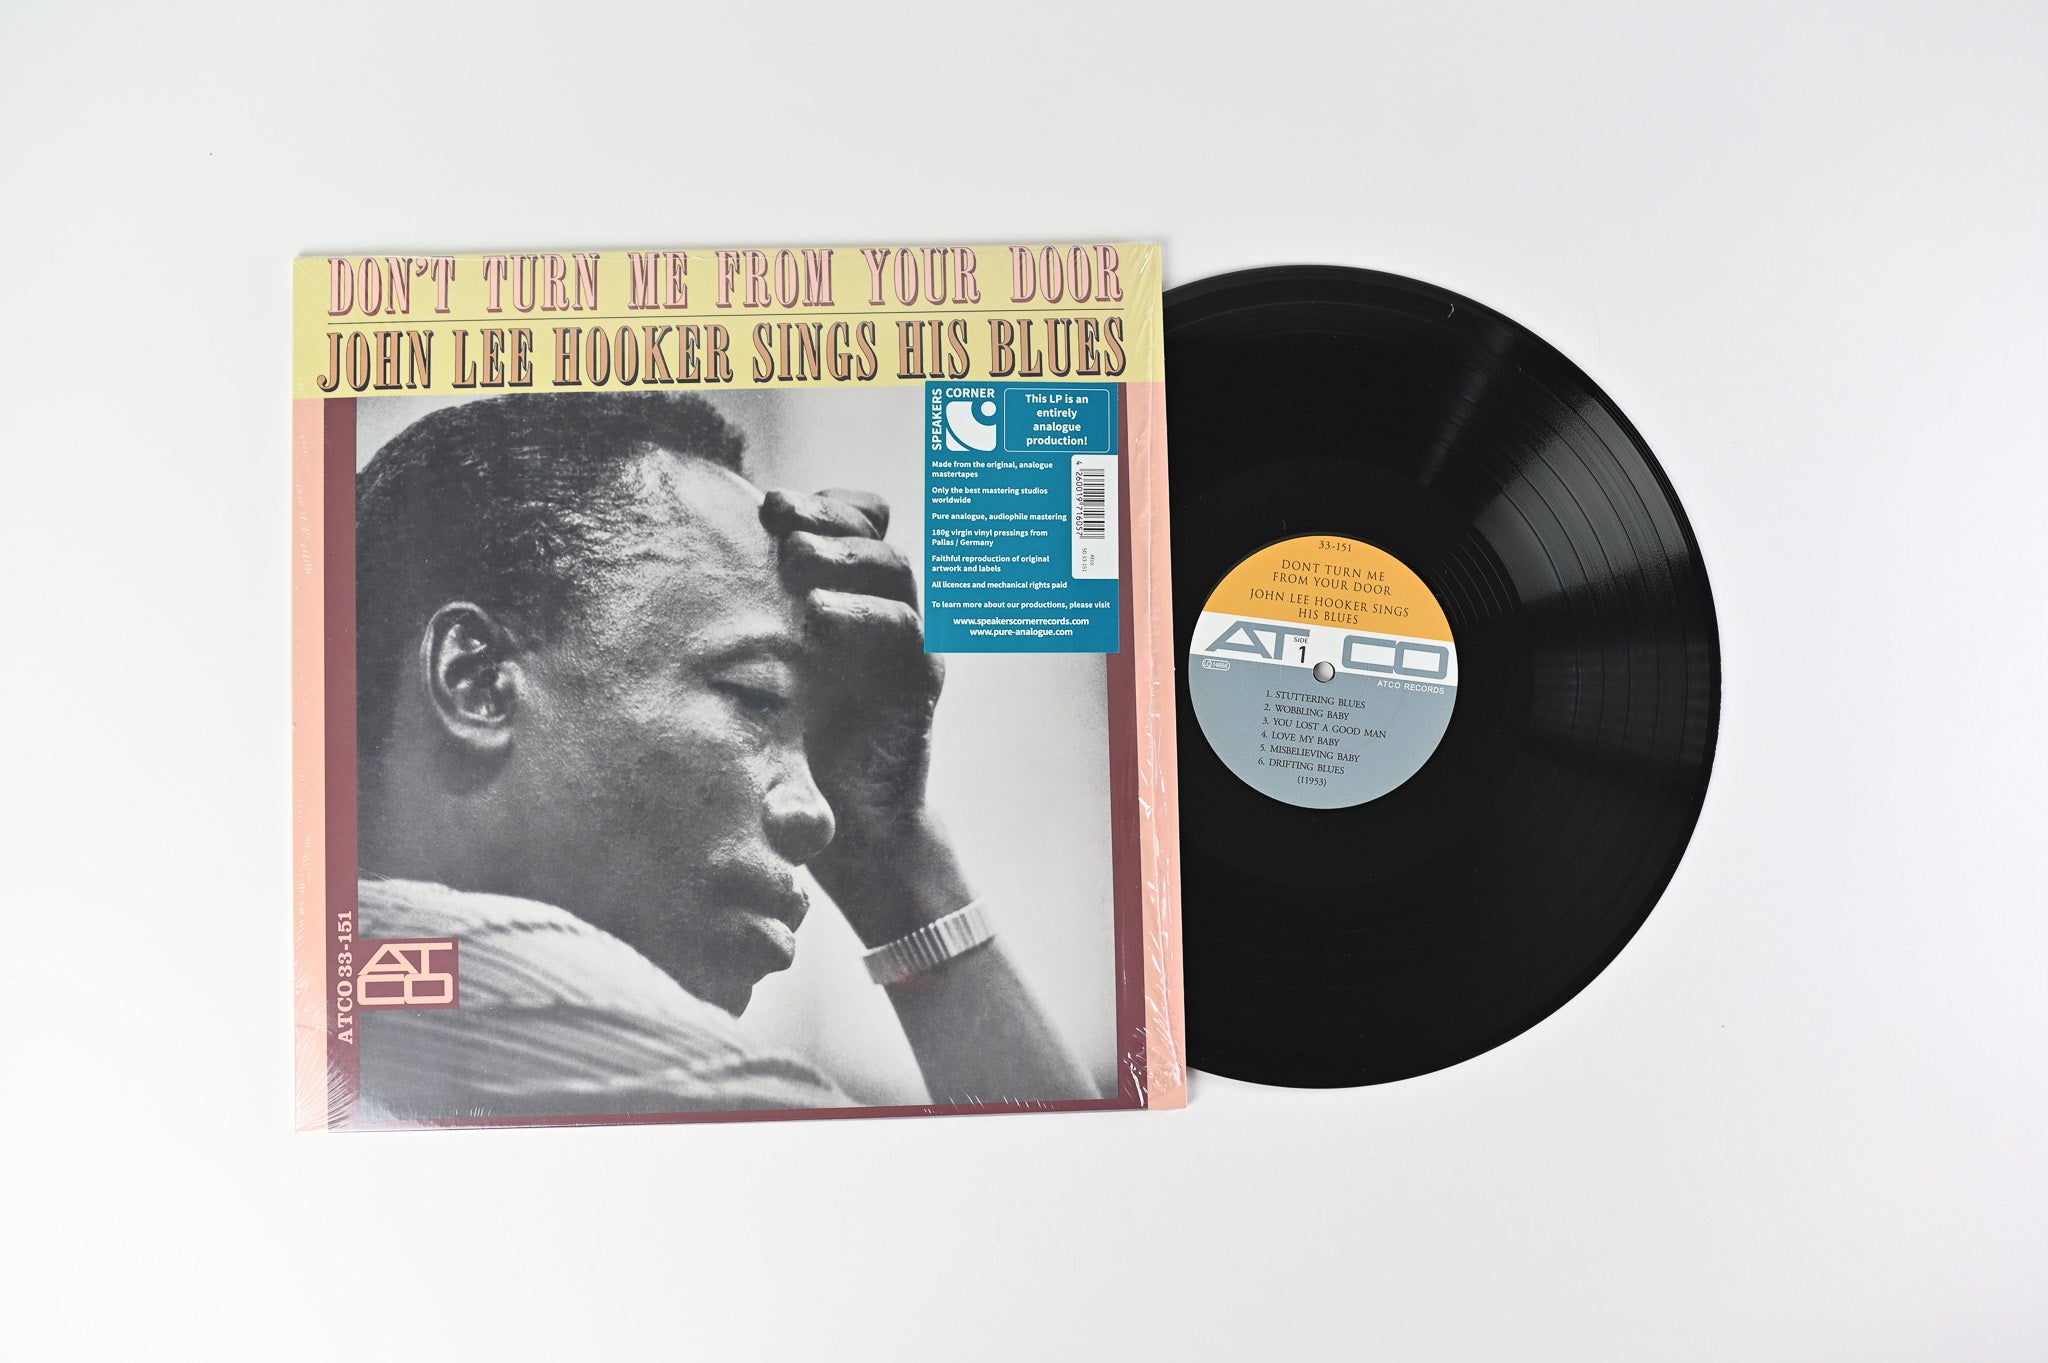 John Lee Hooker - Don't Turn Me From Your Door - John Lee Hooker Sings His Blues on ATCO/Speakers Corner Records Reissue